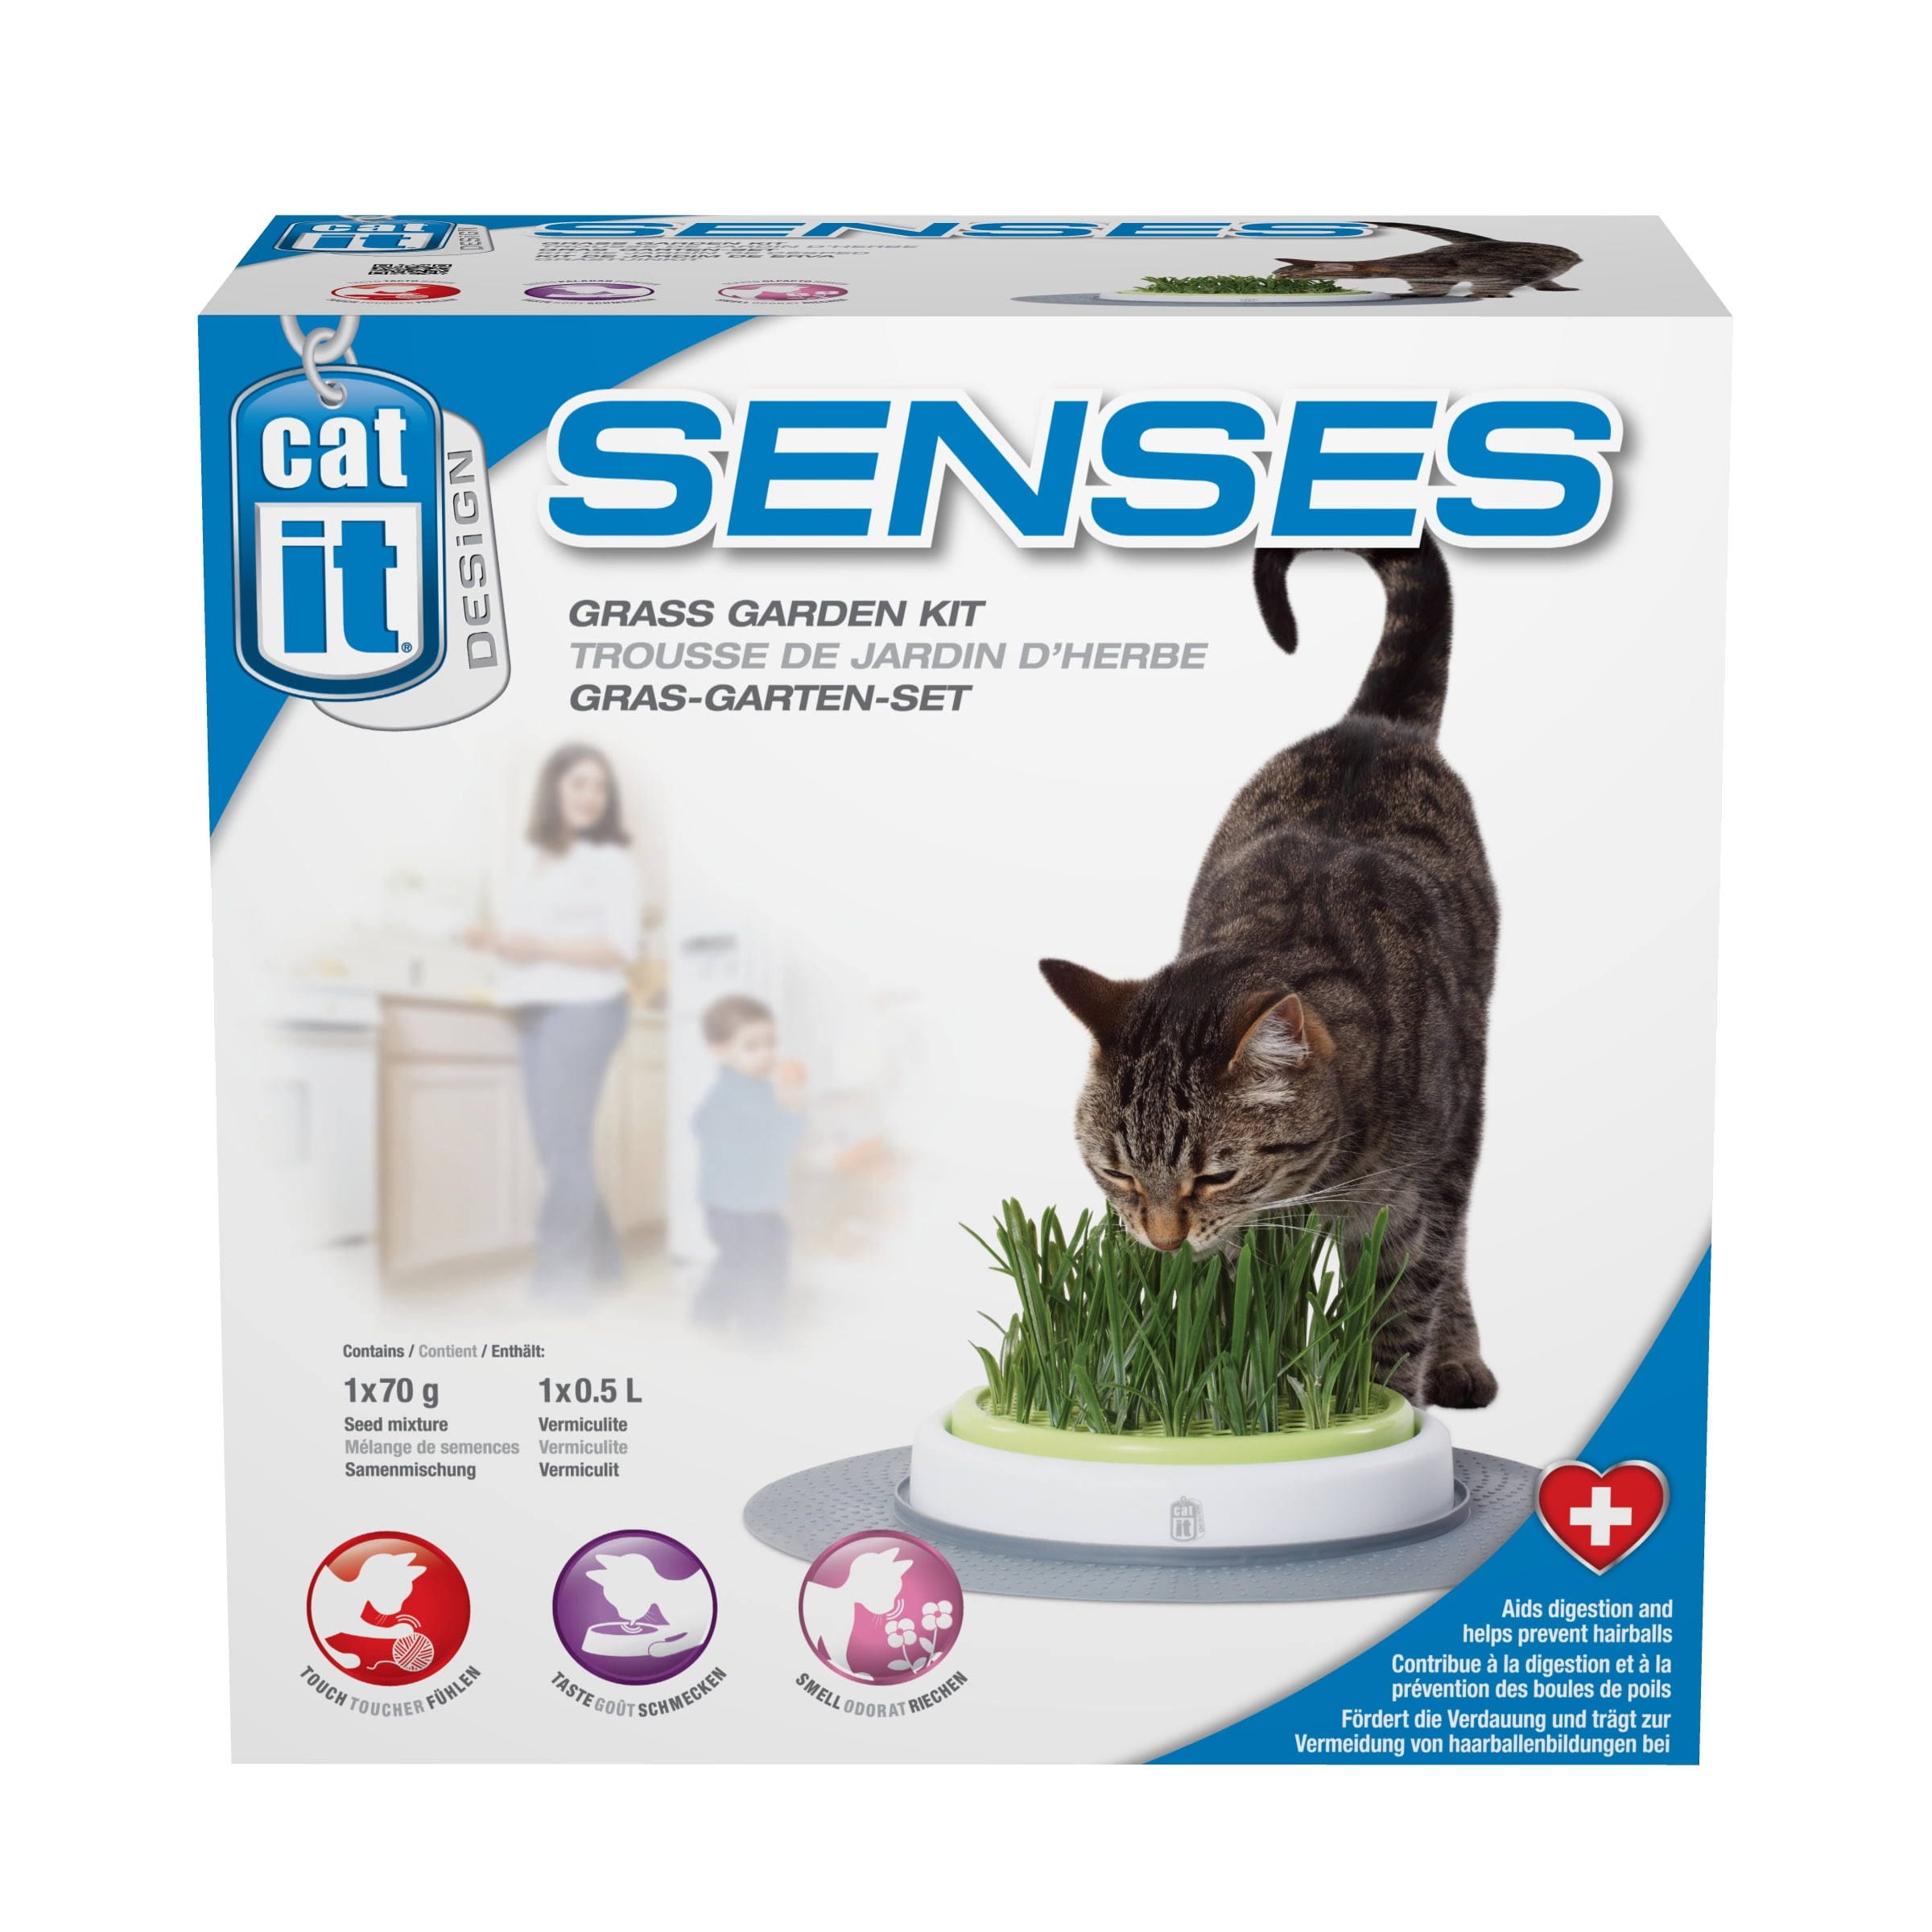 Grow-Your-Own Catnip Garden Kit: Stimulate Cats' Senses Naturally | Image